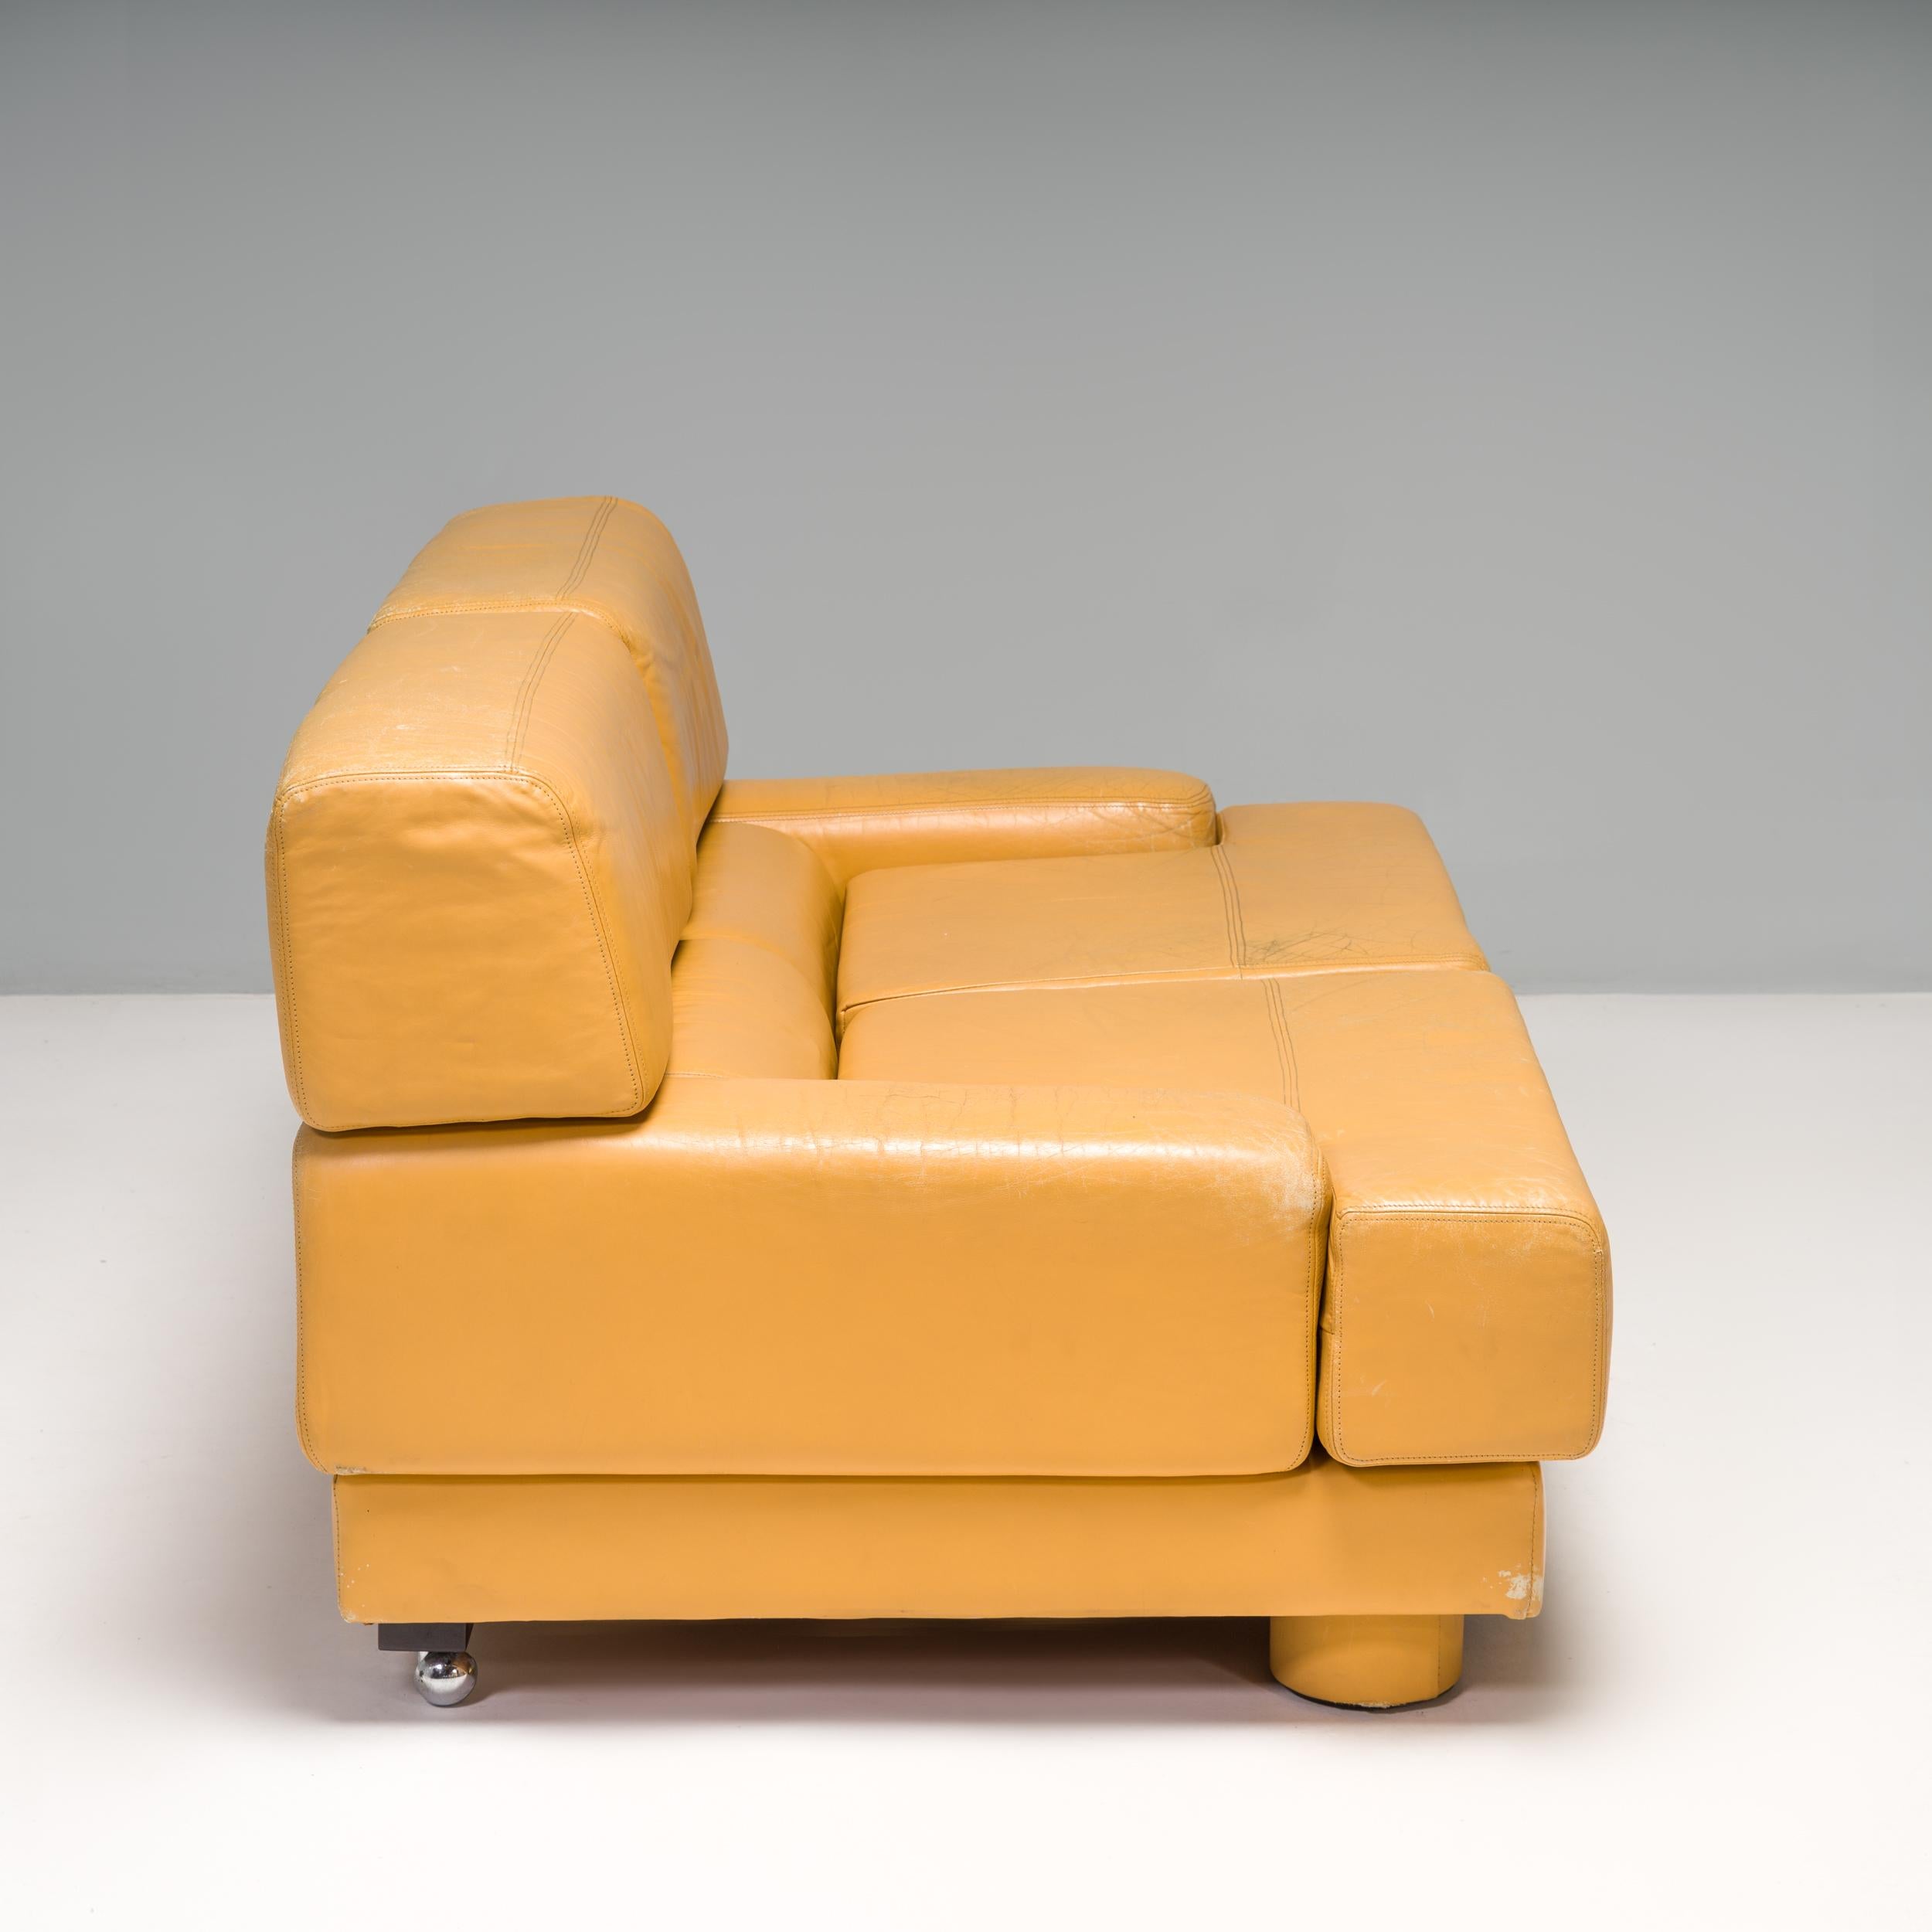 yellow leather sofa